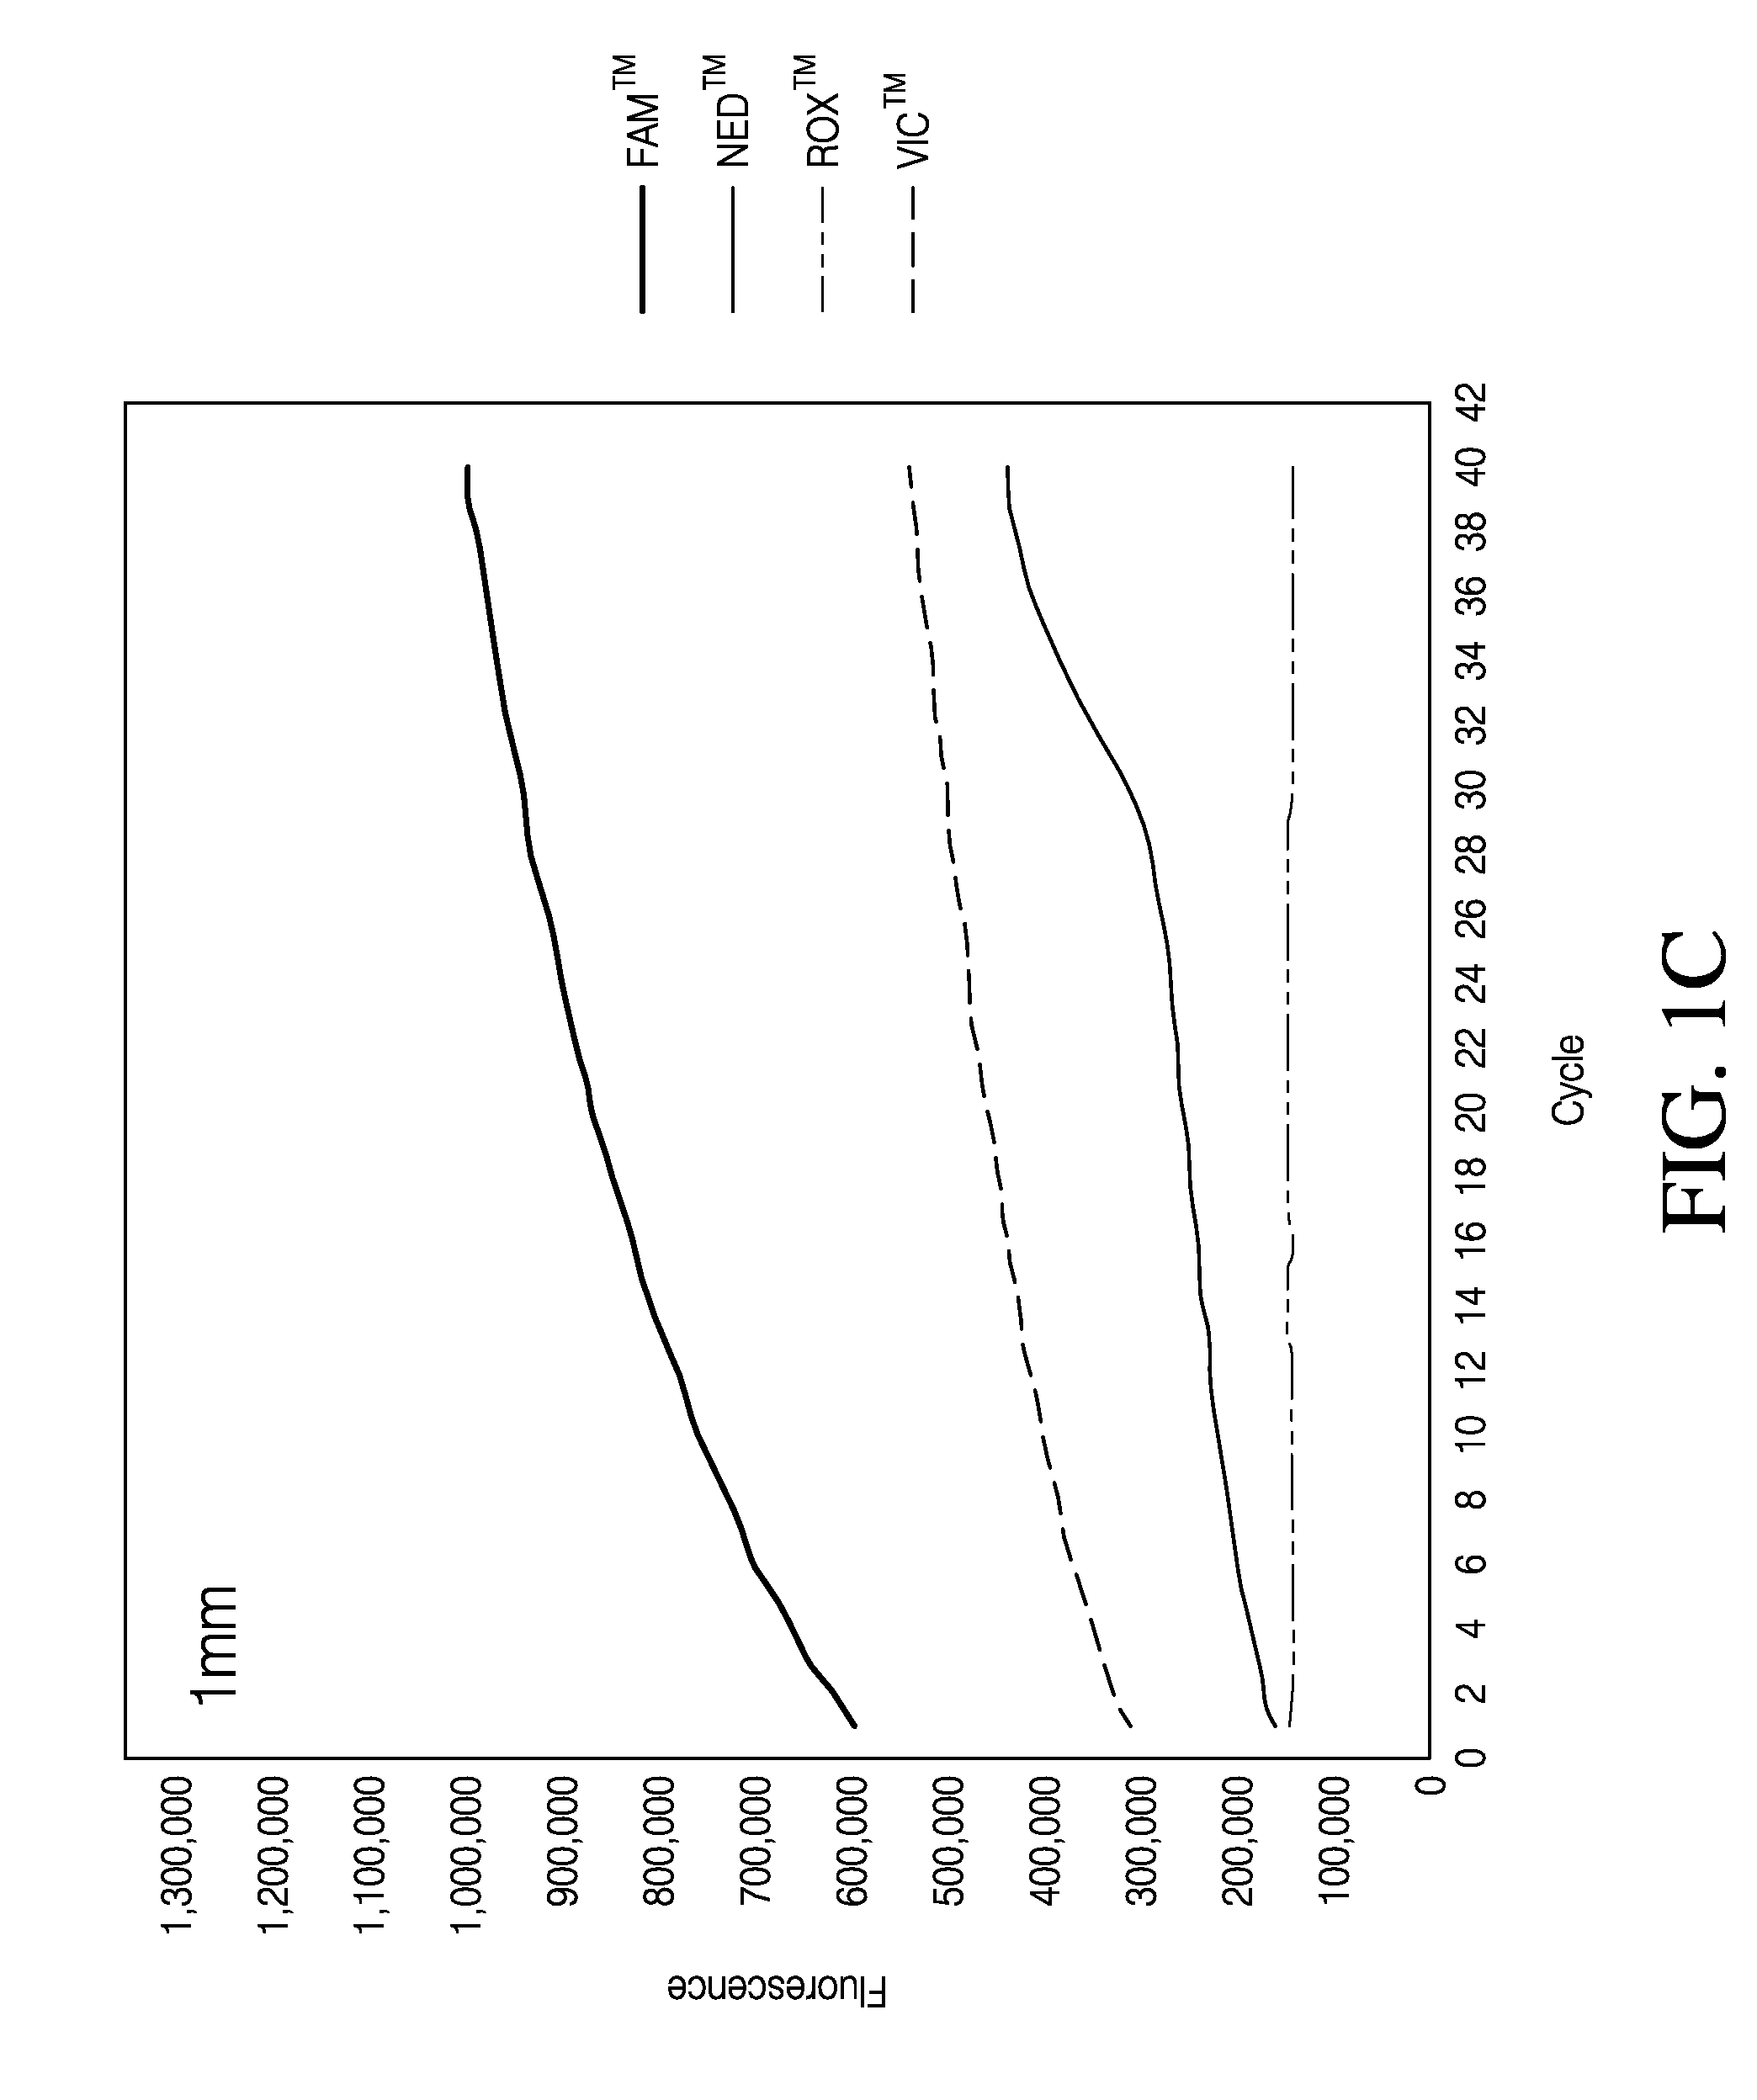 Direct quantitative PCR absent minor groove binders